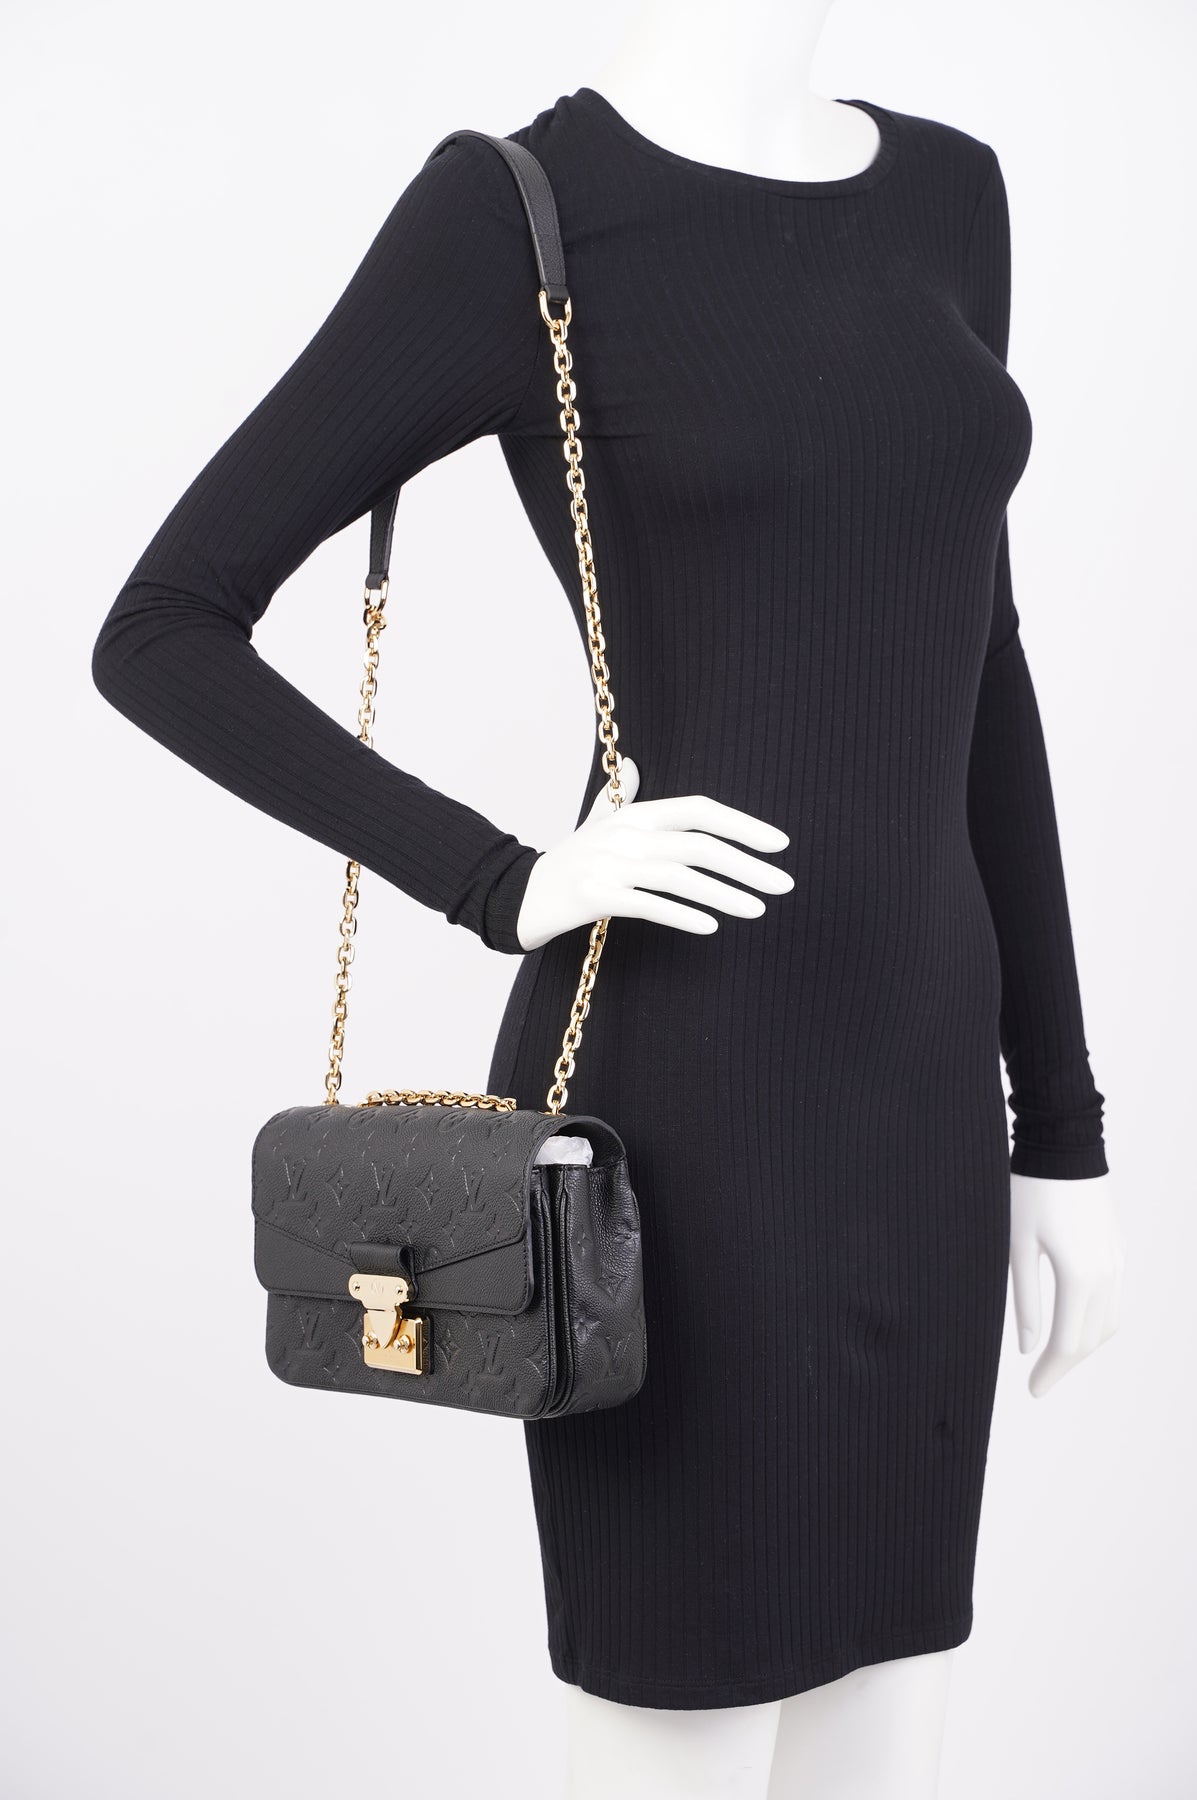 Louis Vuitton Marceau Handbag Monogram Empreinte Leather